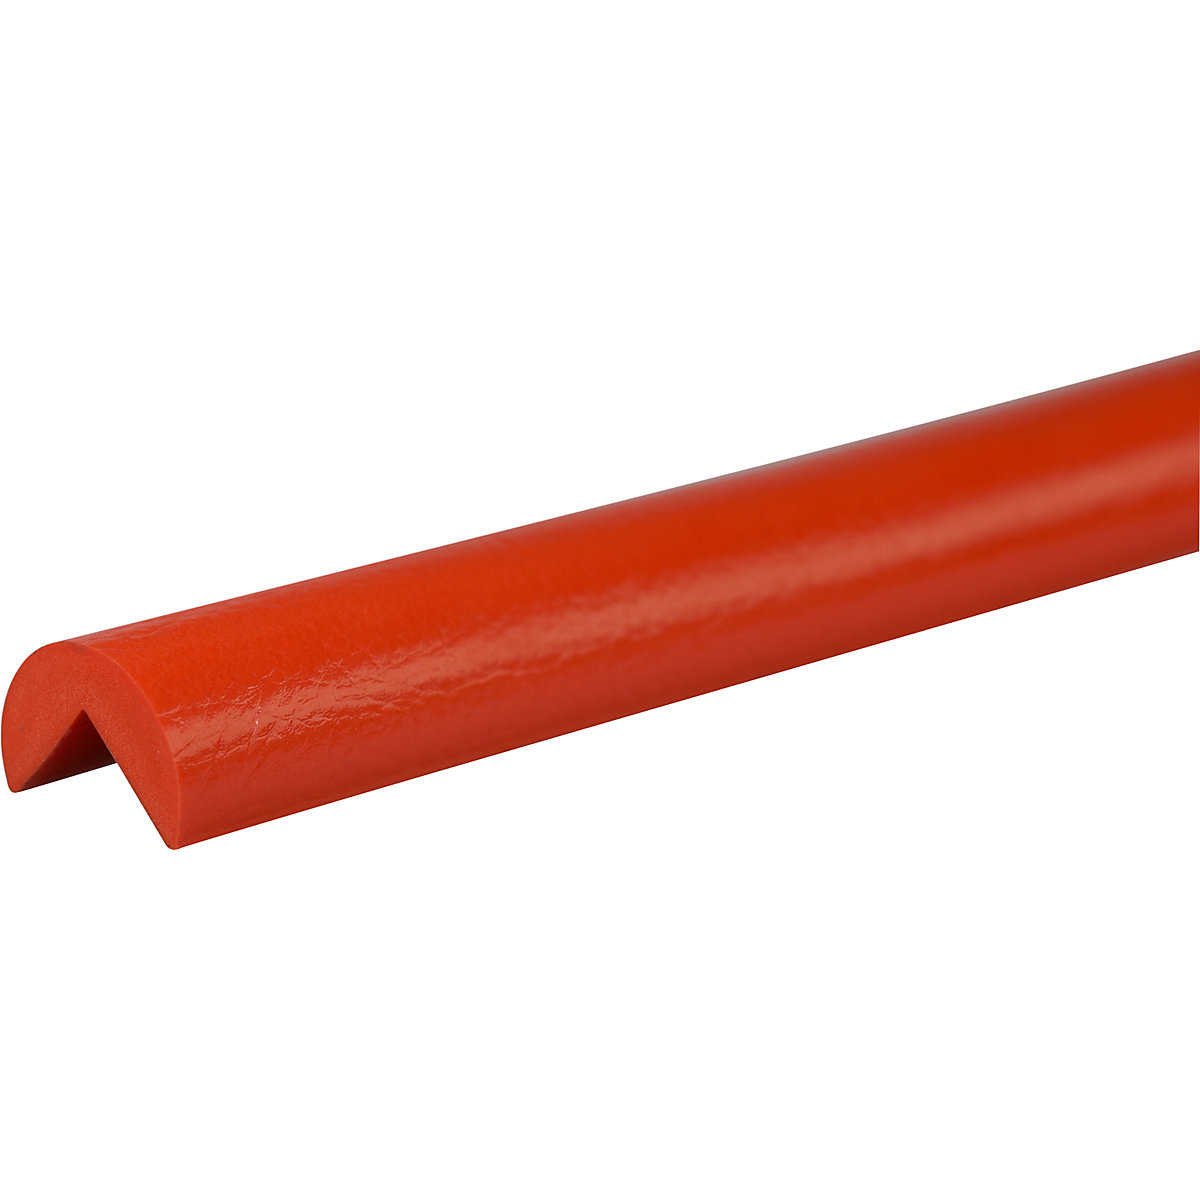 Zaščita vogalov Knuffi® – SHG, tip A, kos 1 m, rdeče barve-11